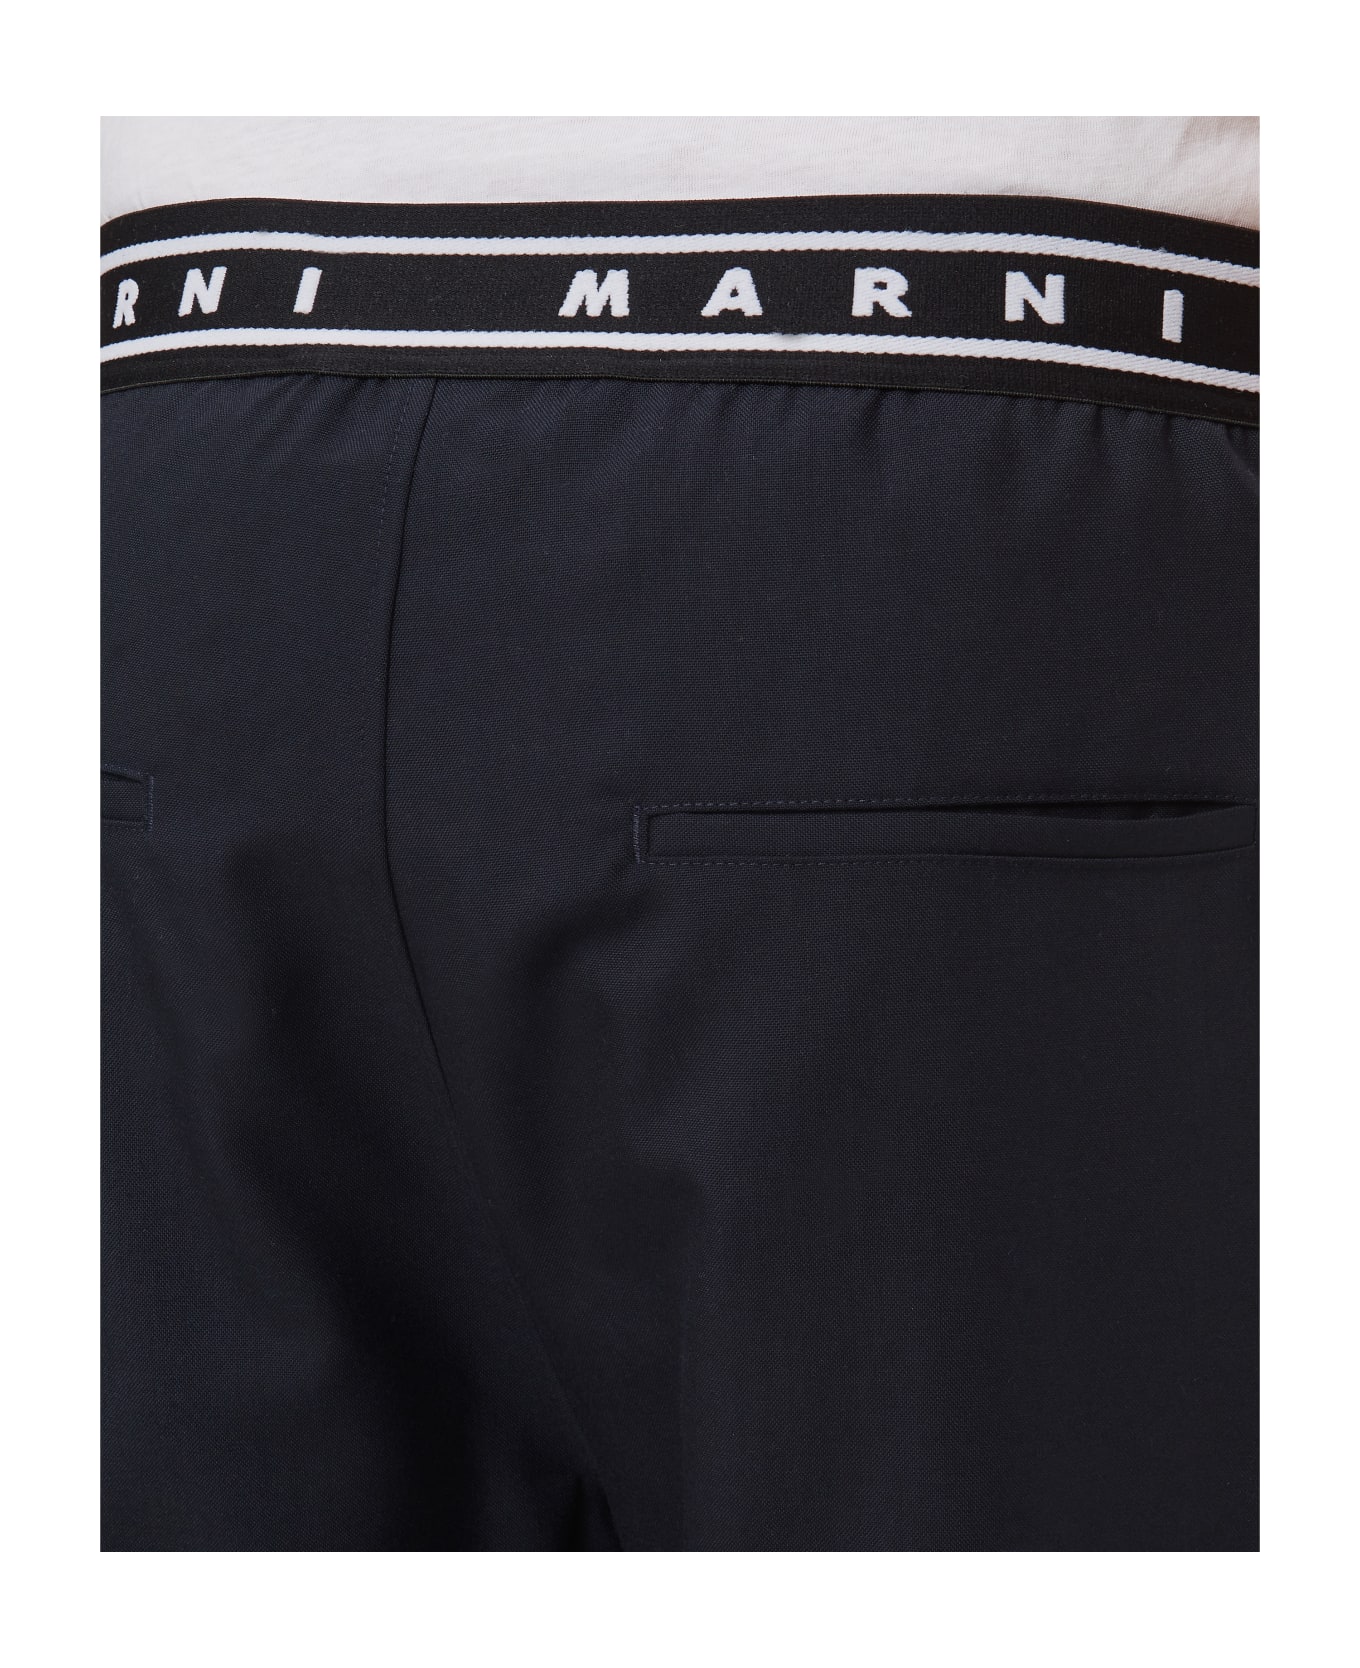 Marni Trousers With Marni Logo Waistband - Blue